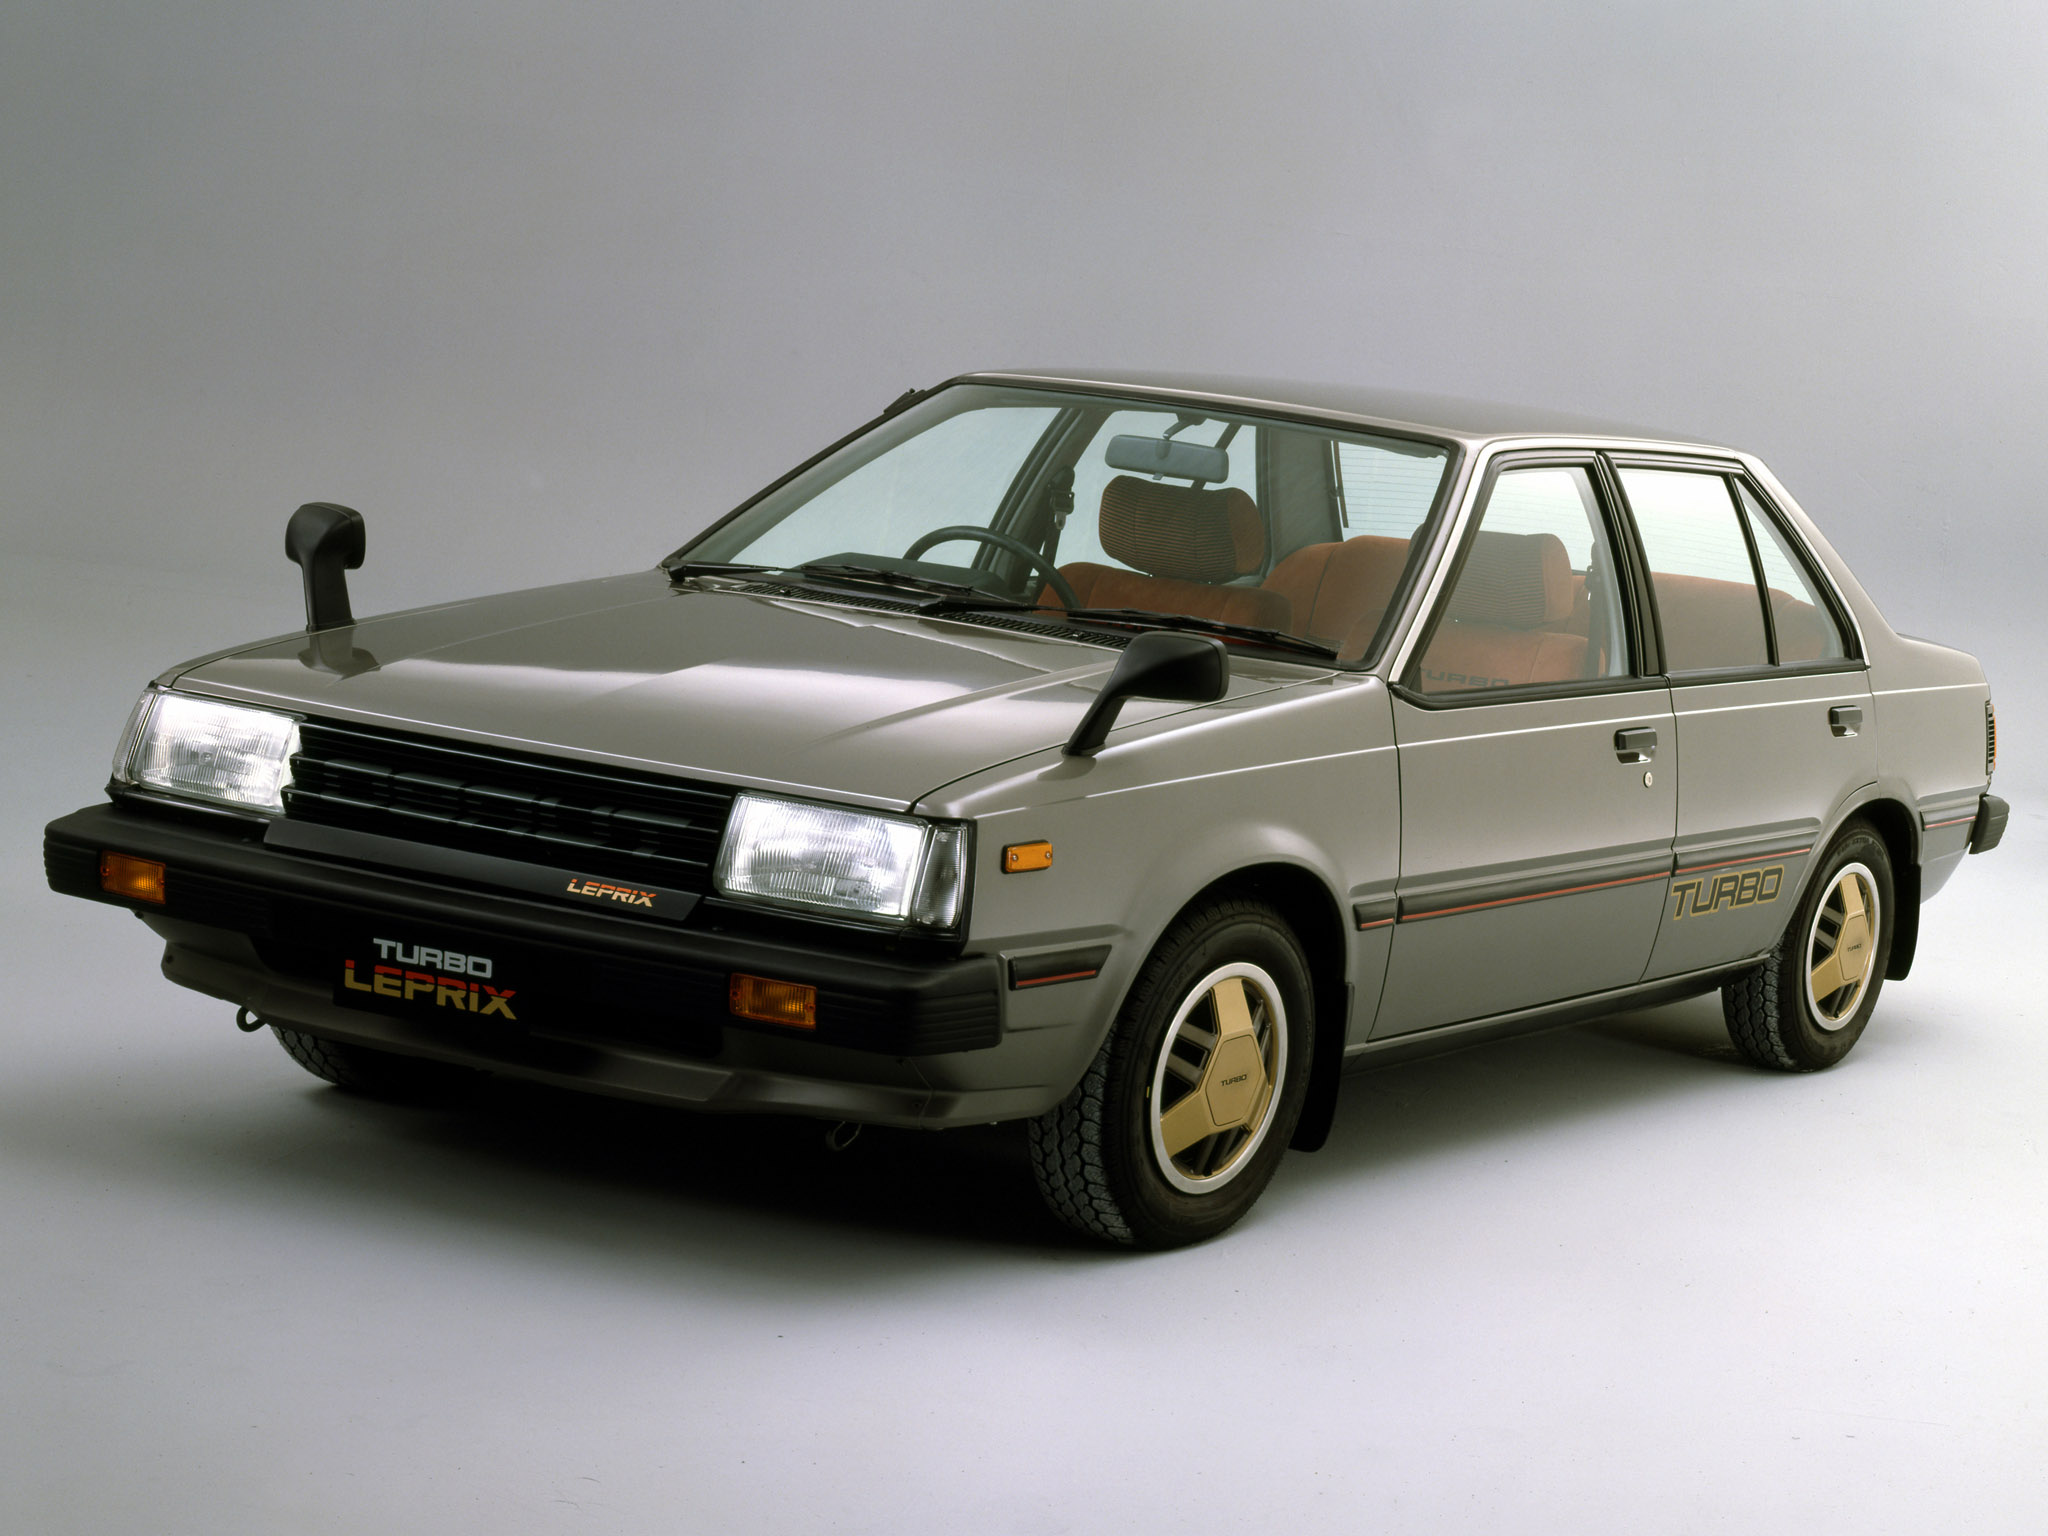 nissan_sunny-turbo-leprix-sedan-jdm-b11-1982-85_r5_jpg.jpg